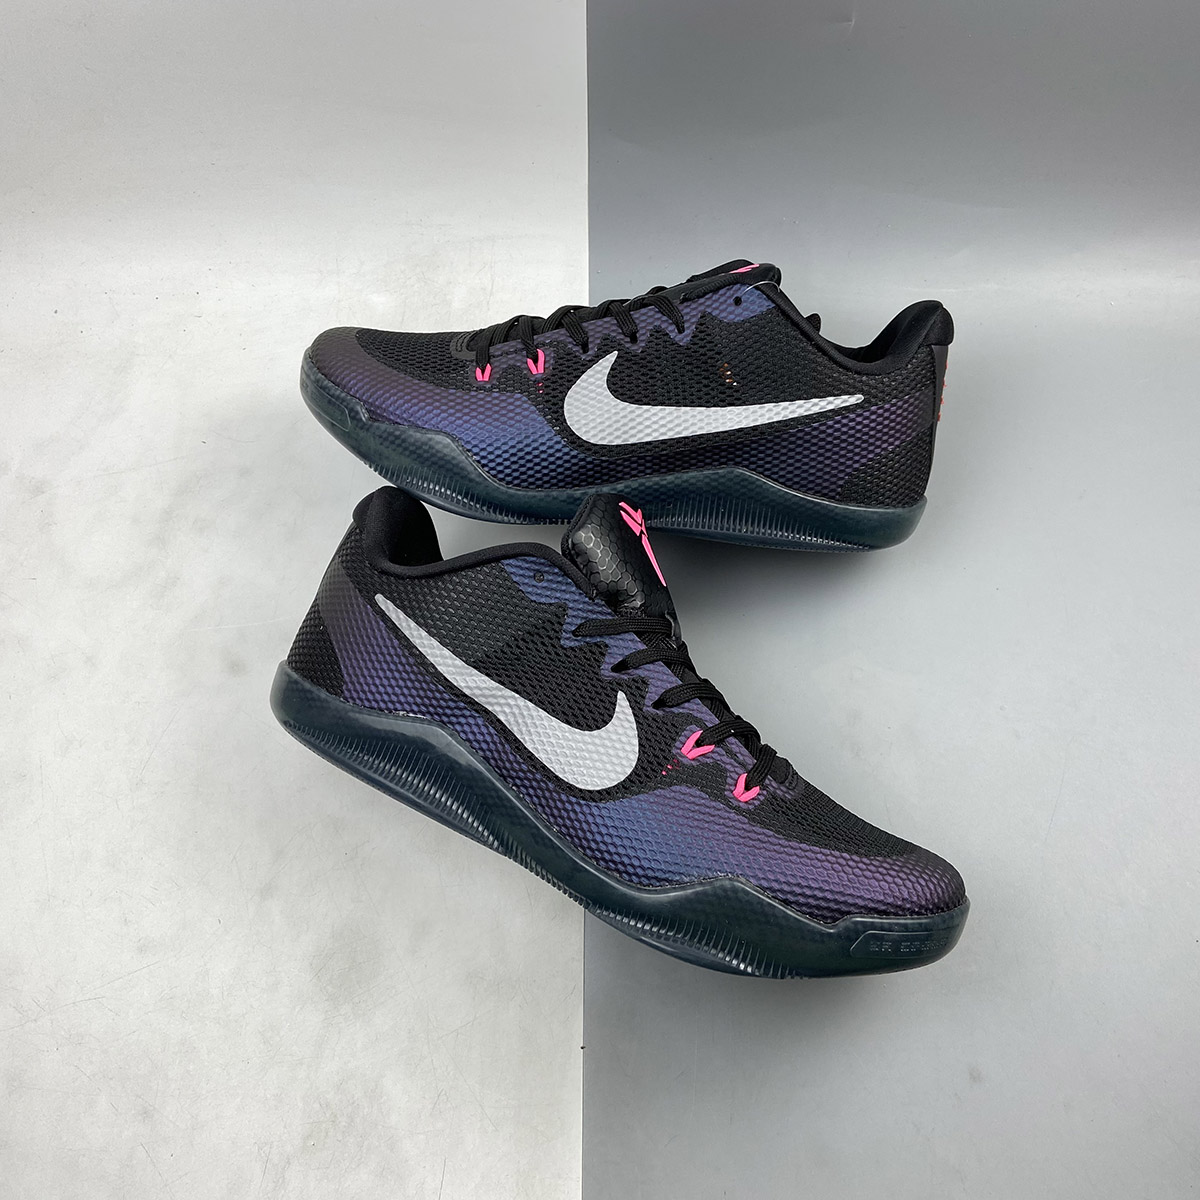 Nike Kobe 11 Low 'Invisibility Cloak' Black/Hyper Pink-Metallic